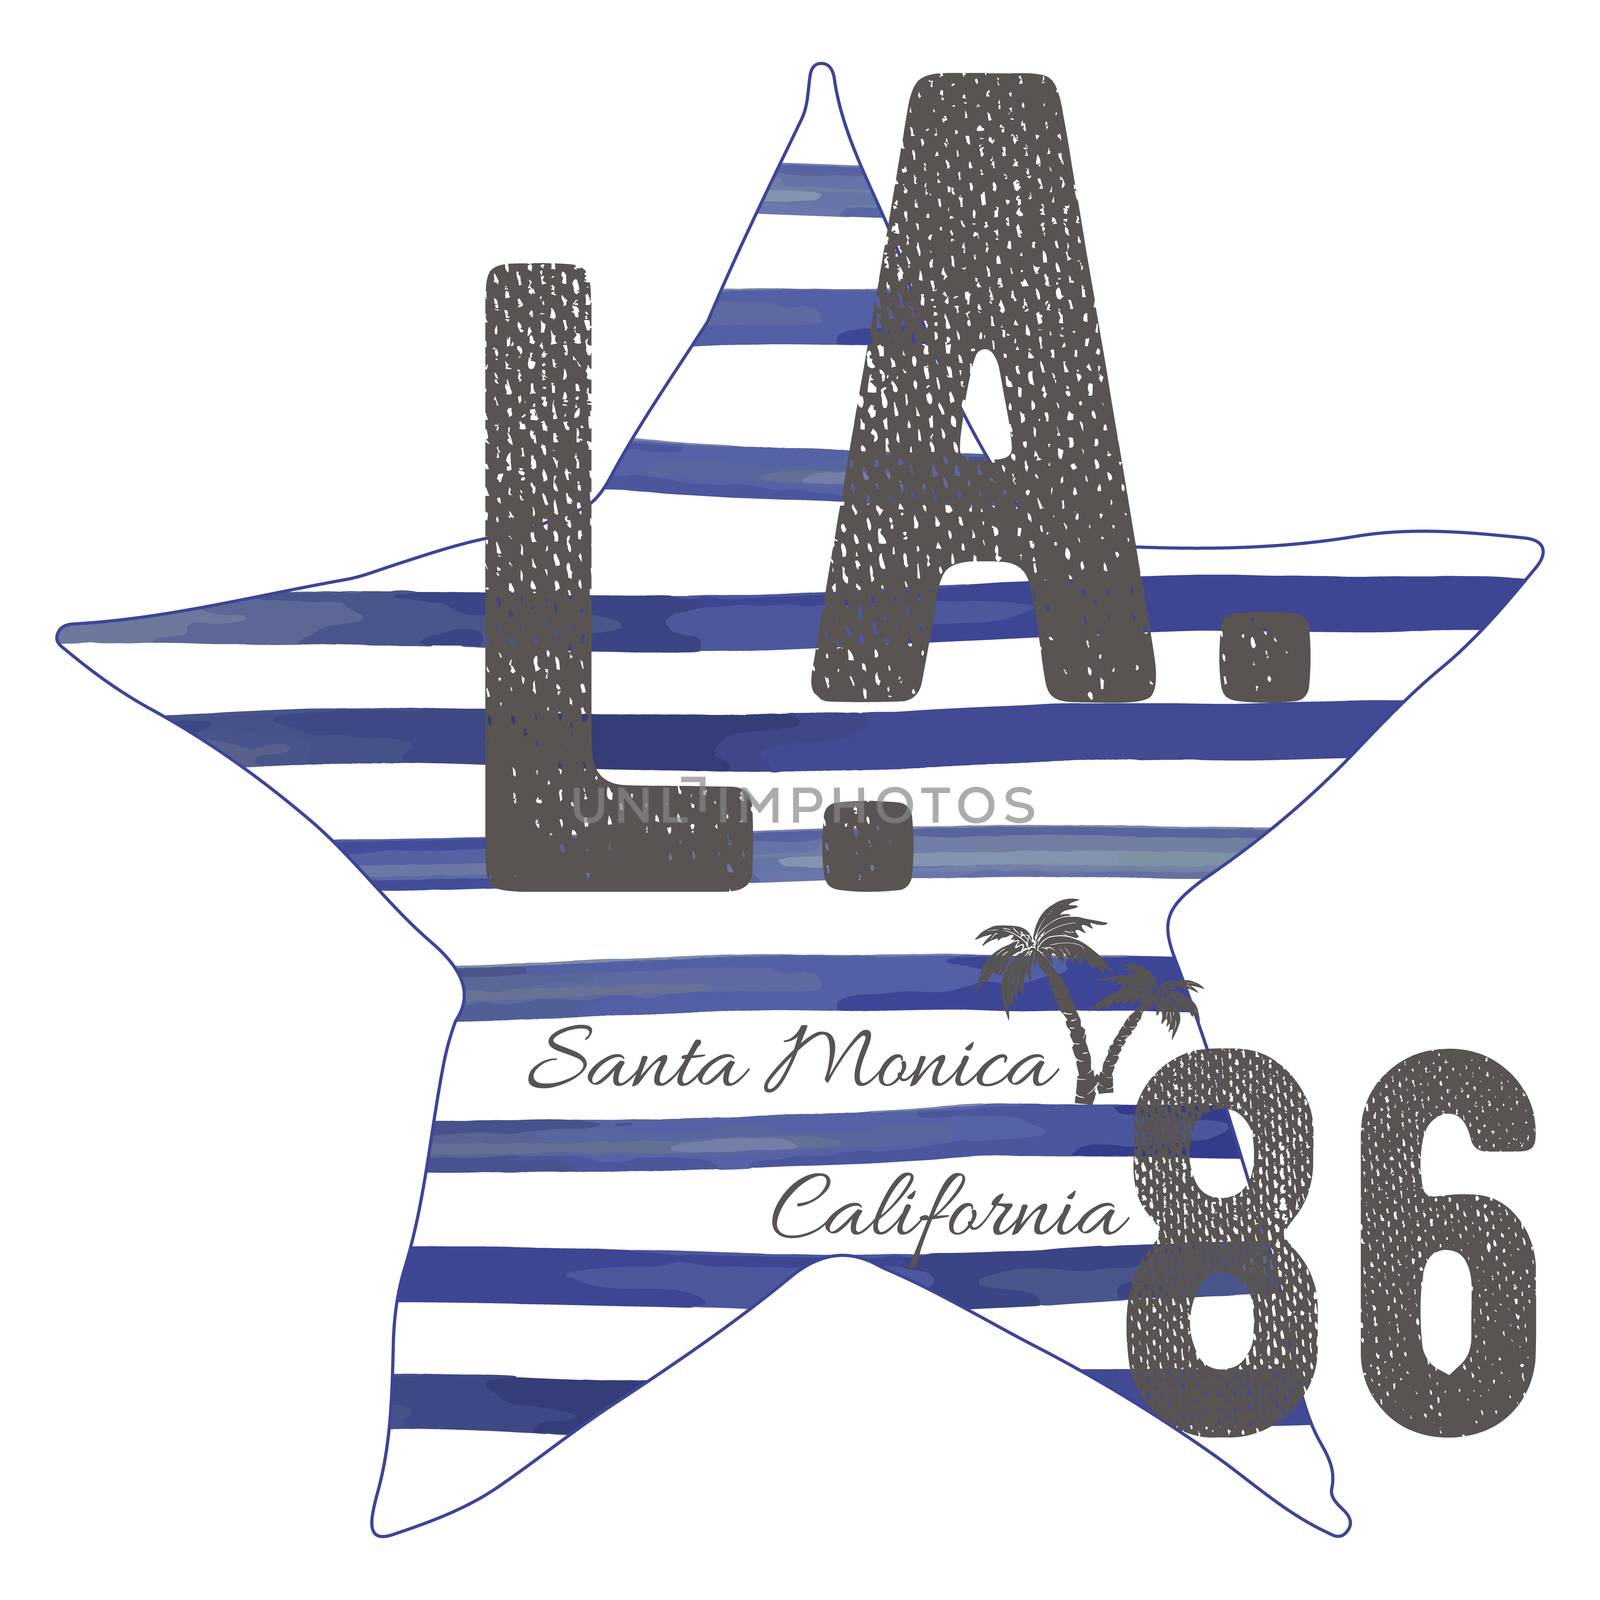 T-shirt typography design, LA california santa monica beach  printing graphics, typographic  vector illustration, Los Angeles graphic design for label or t-shirt print, Badge, Applique by Lemon_workshop